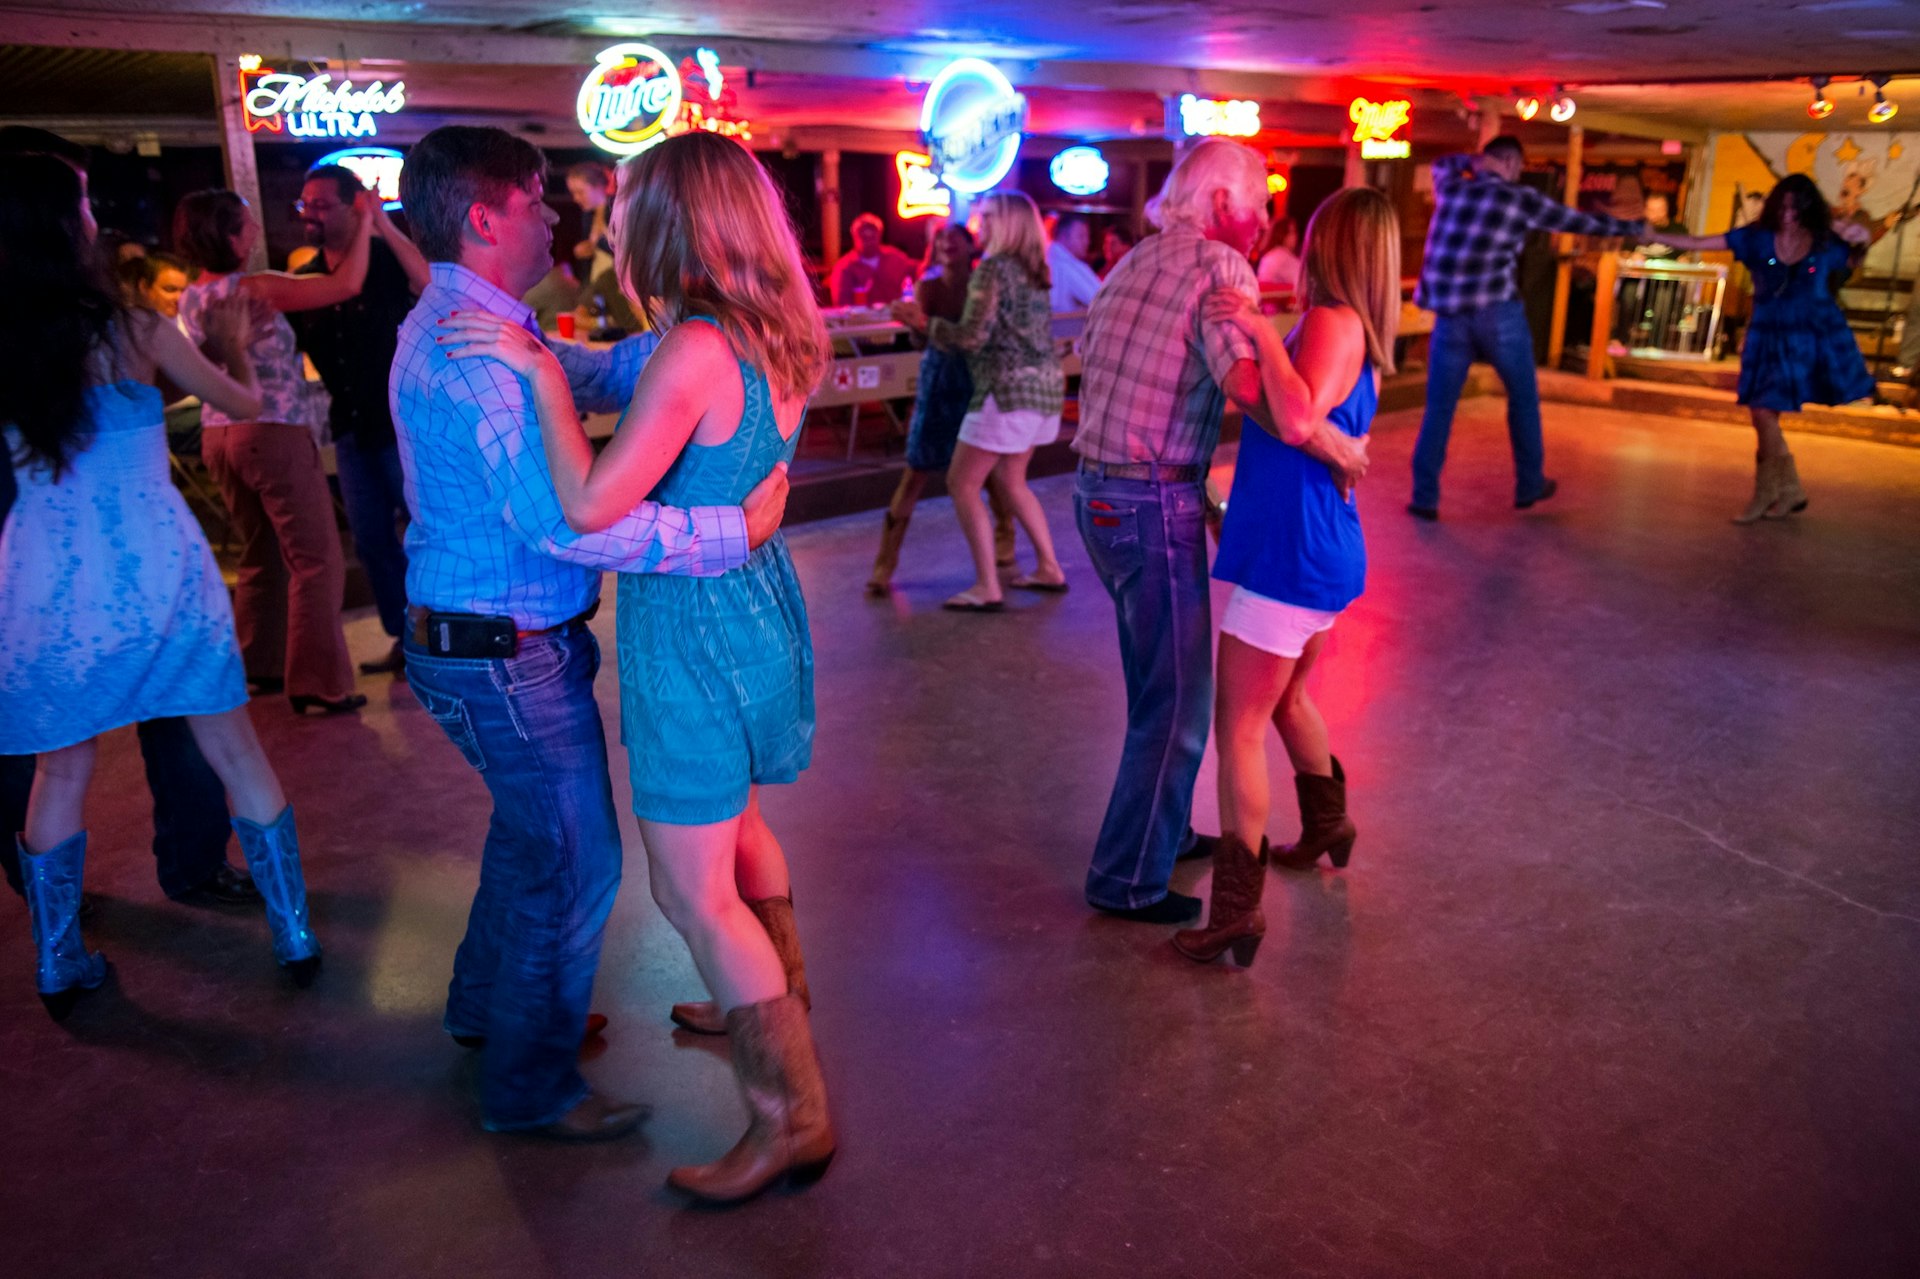 Austin,,Texas,-,June,13,,2014:,People,Dancing,Country,Music